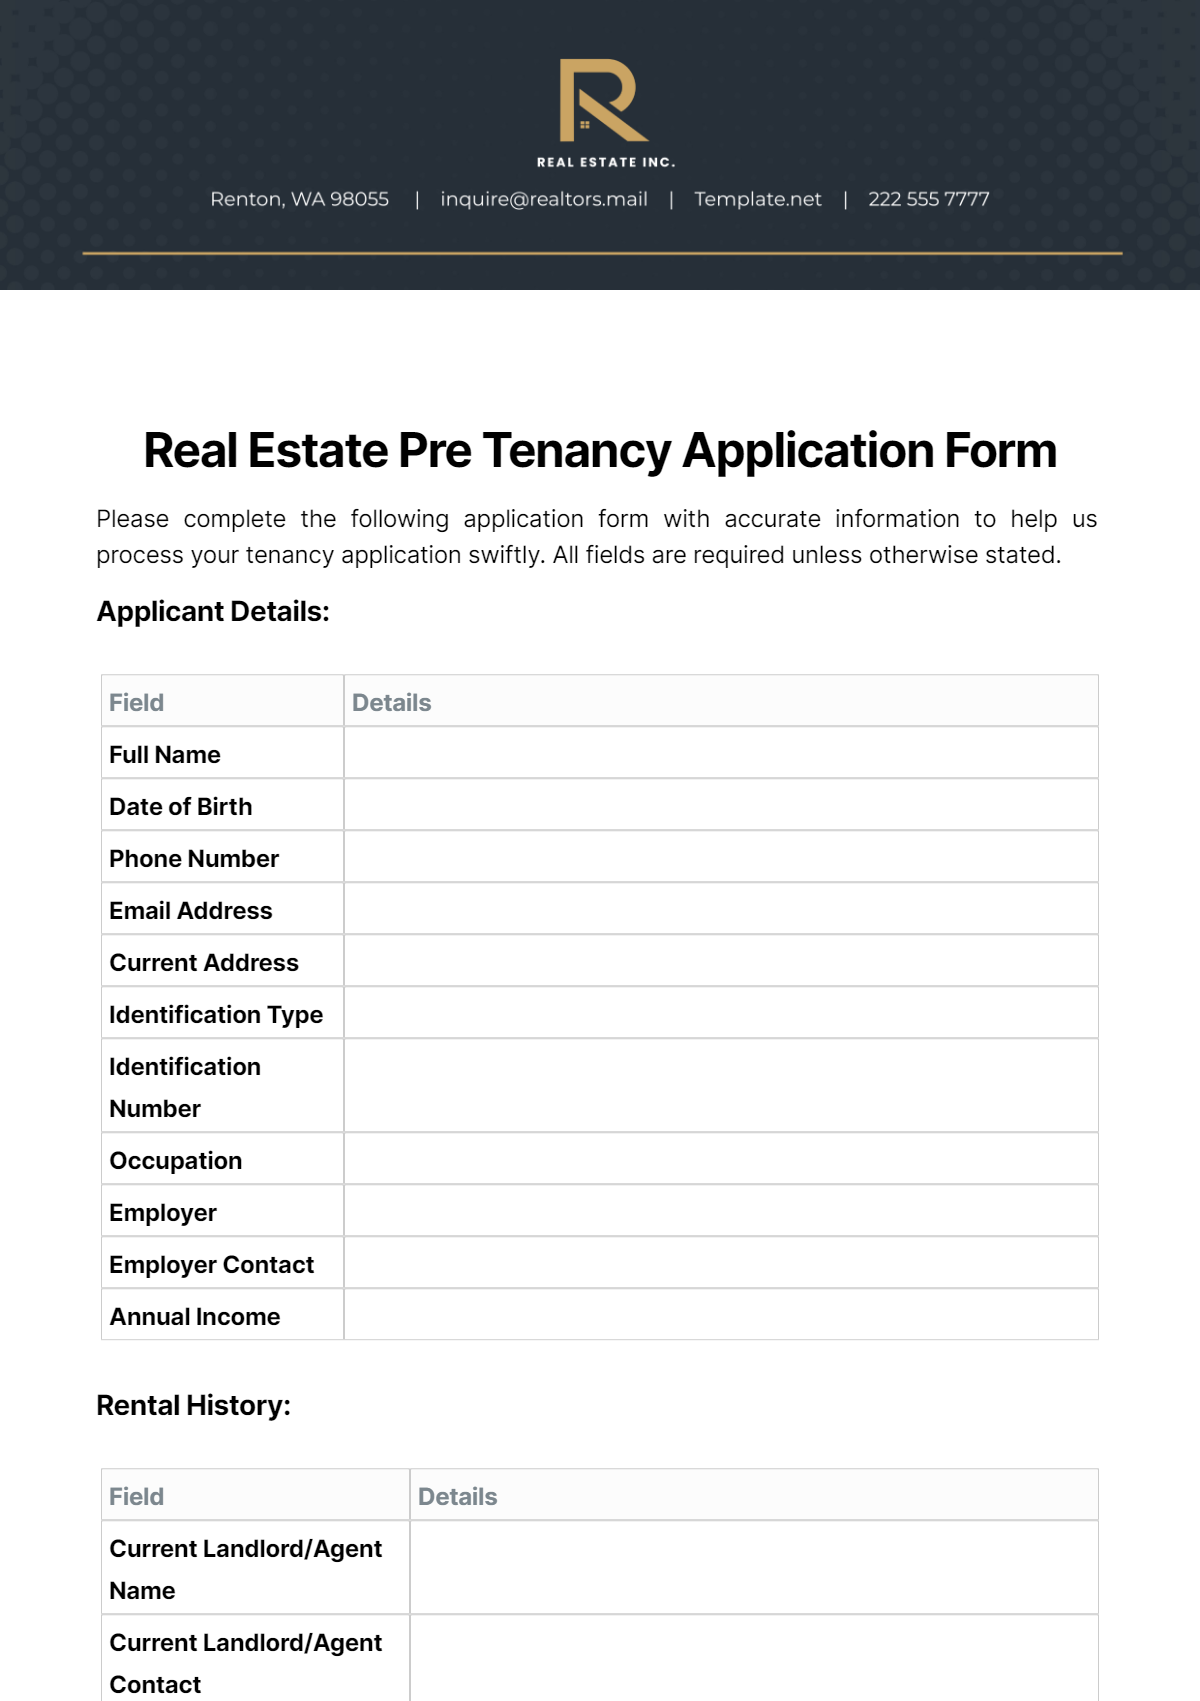 Real Estate Pre Tenancy Application Form Template